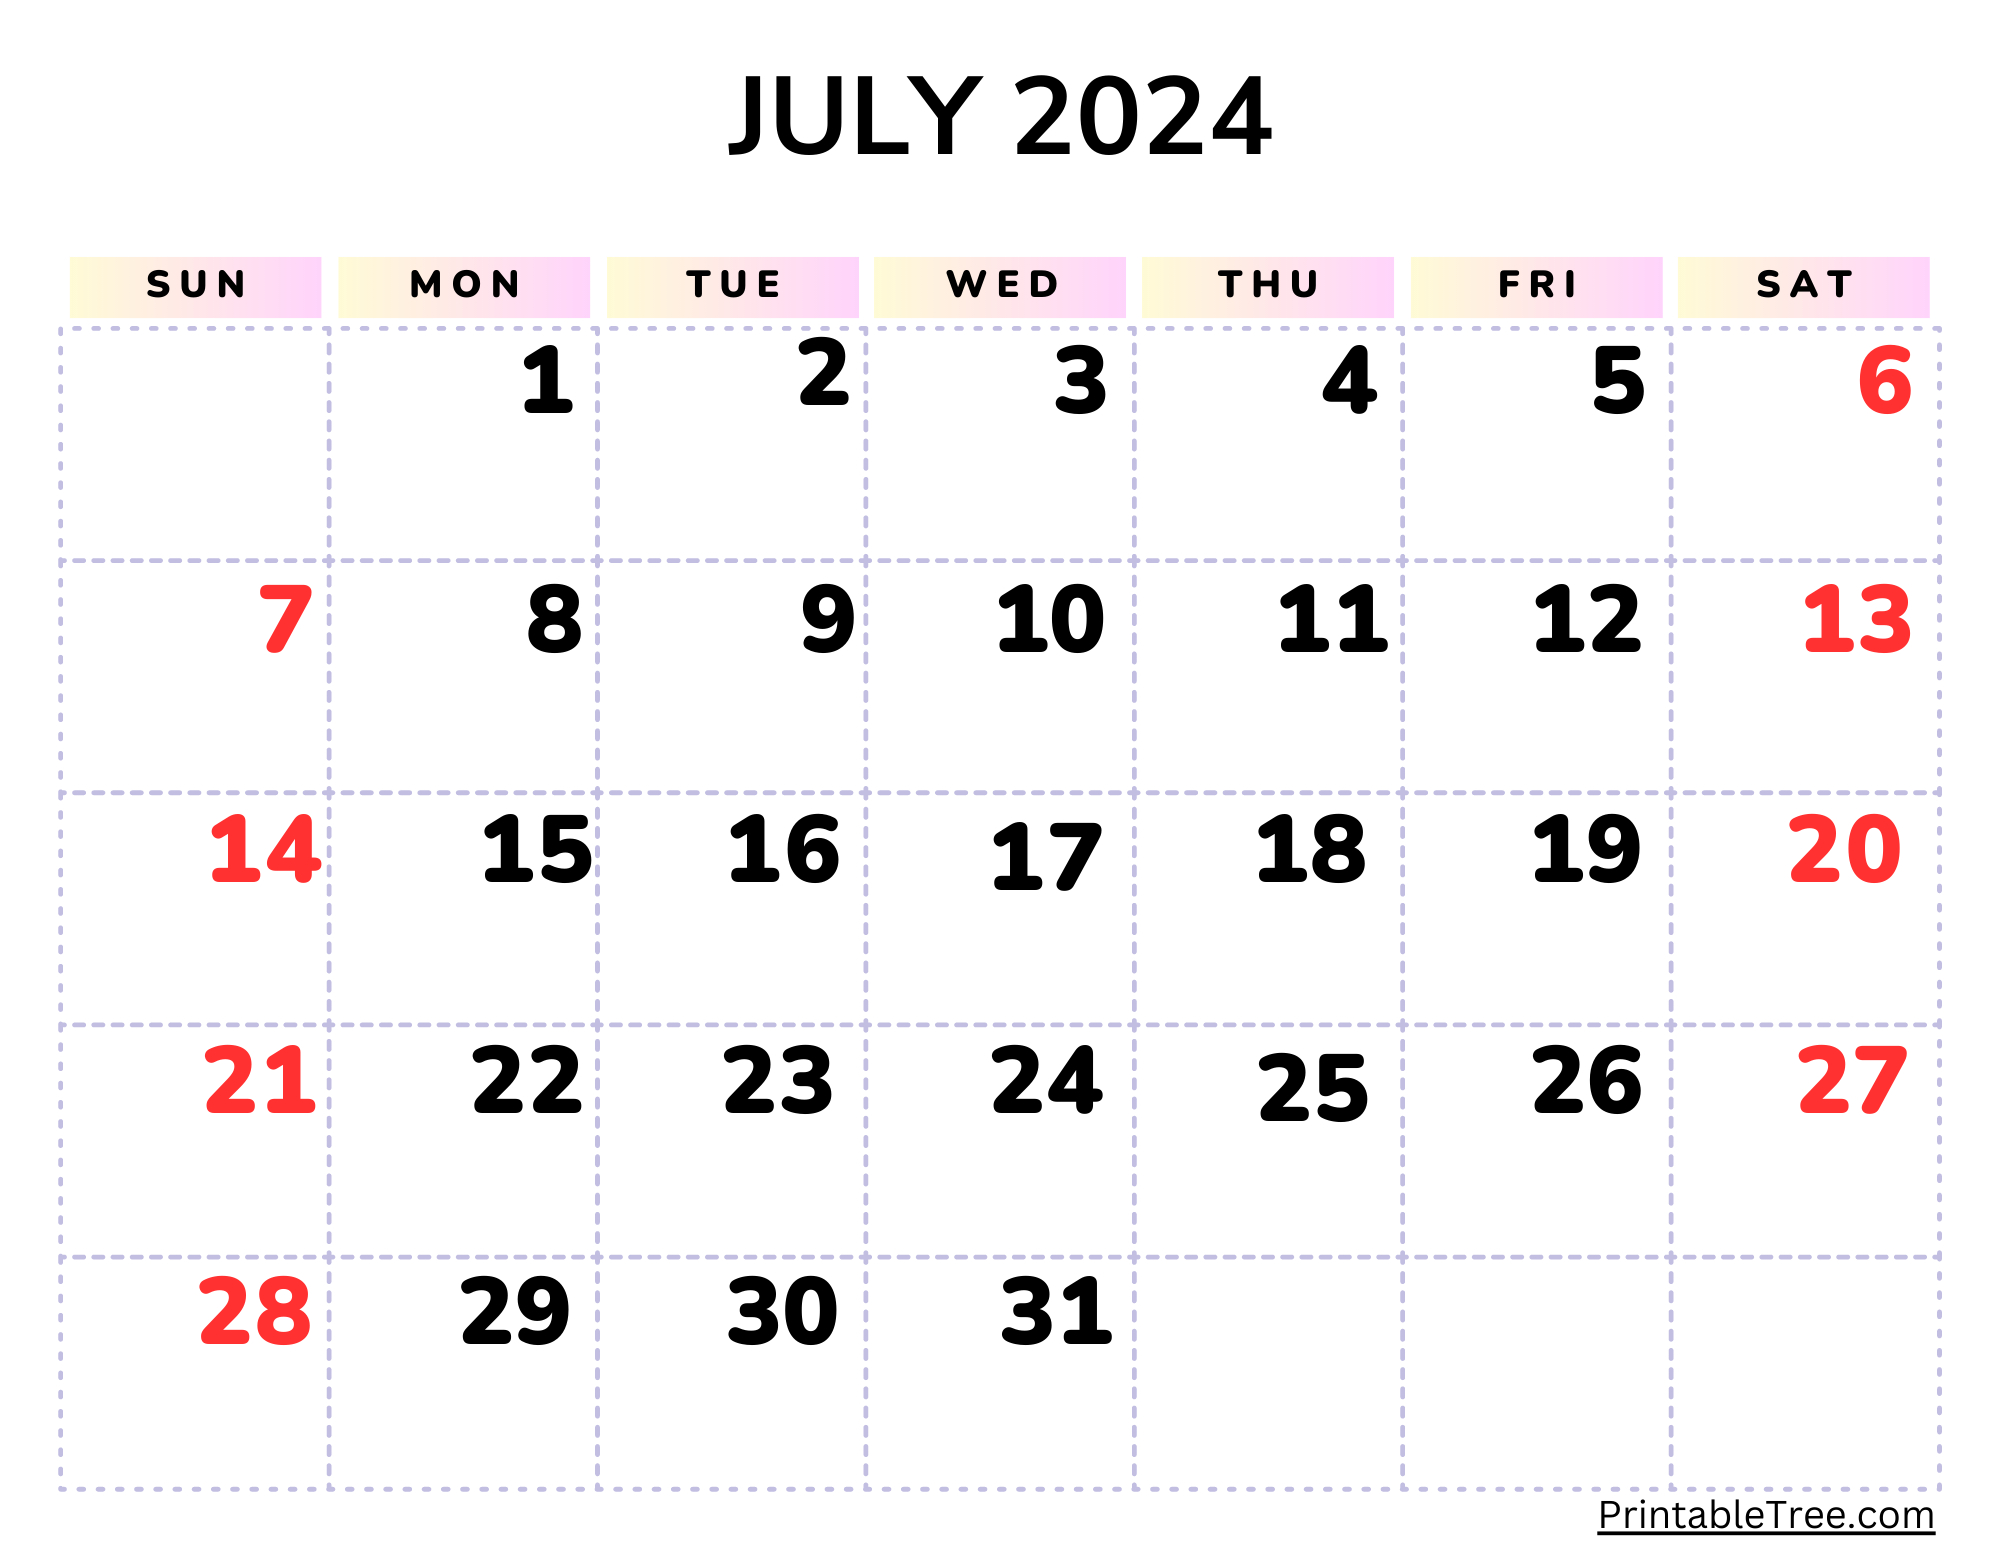 July 2024 Calendar Printable Pdf With Holidays Free Template regarding July 2024 Calendar Big Numbers